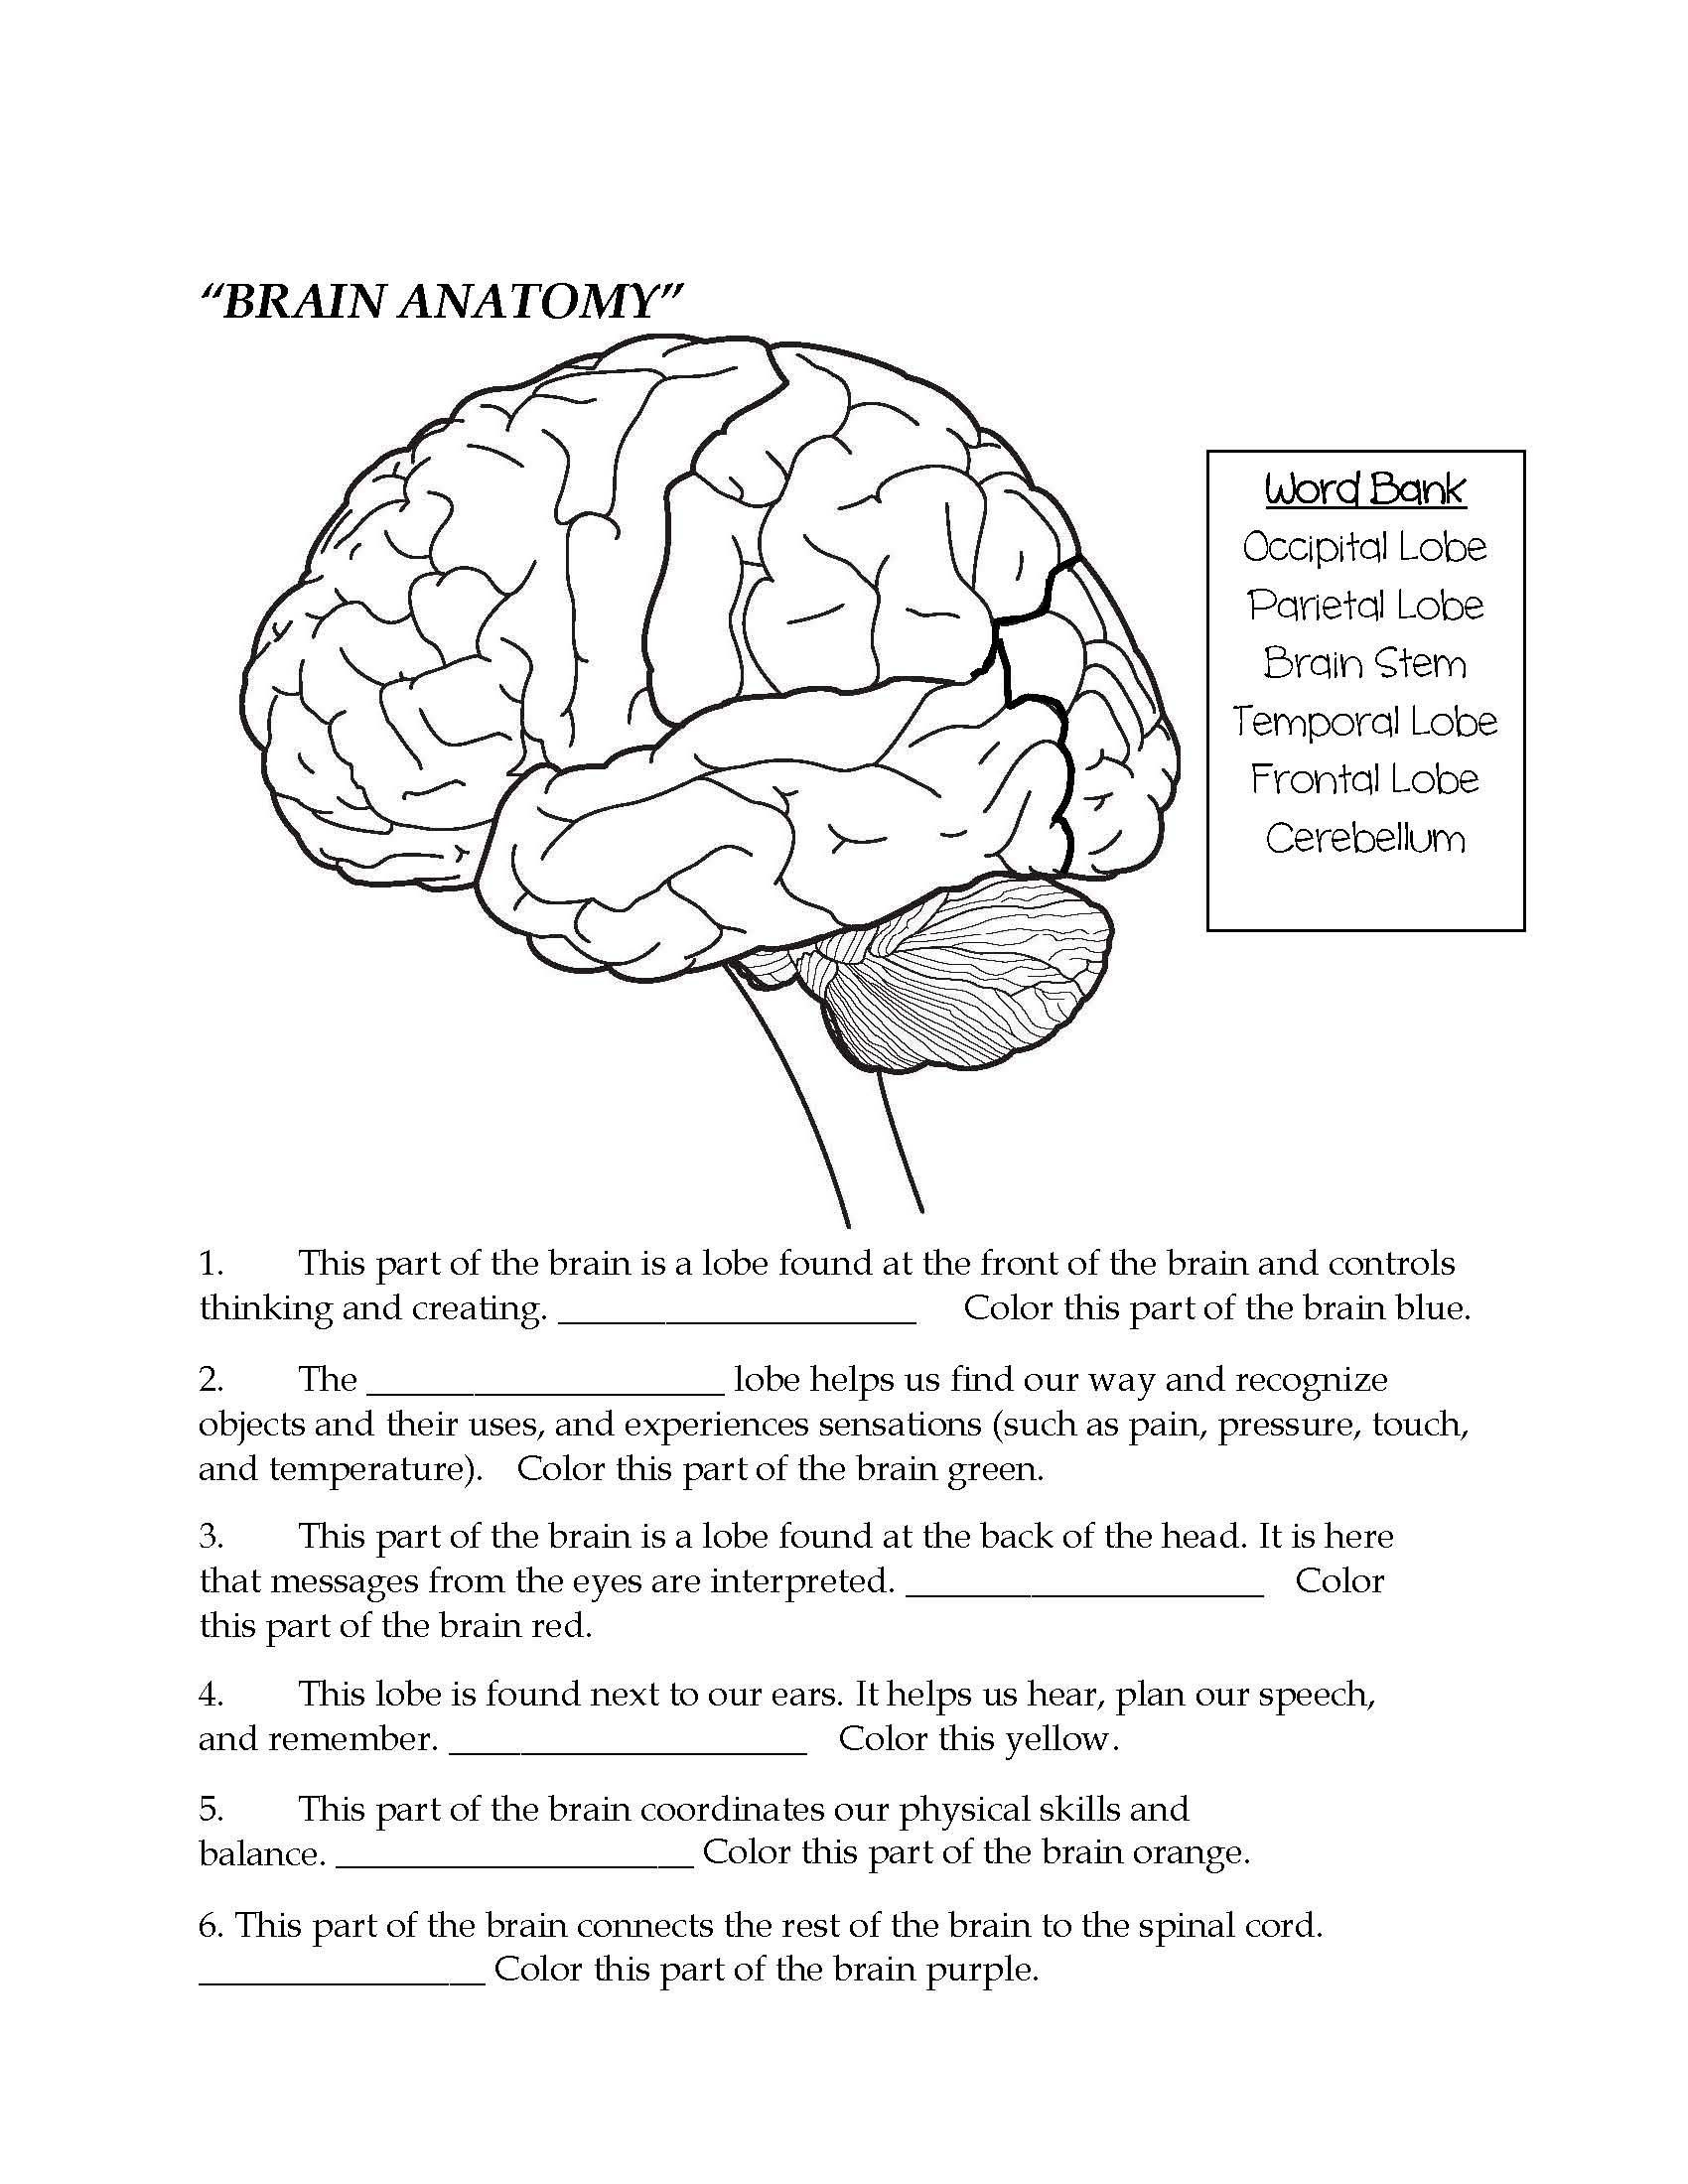 brain-anatomy-and-physiology-worksheet-anatomy-worksheets